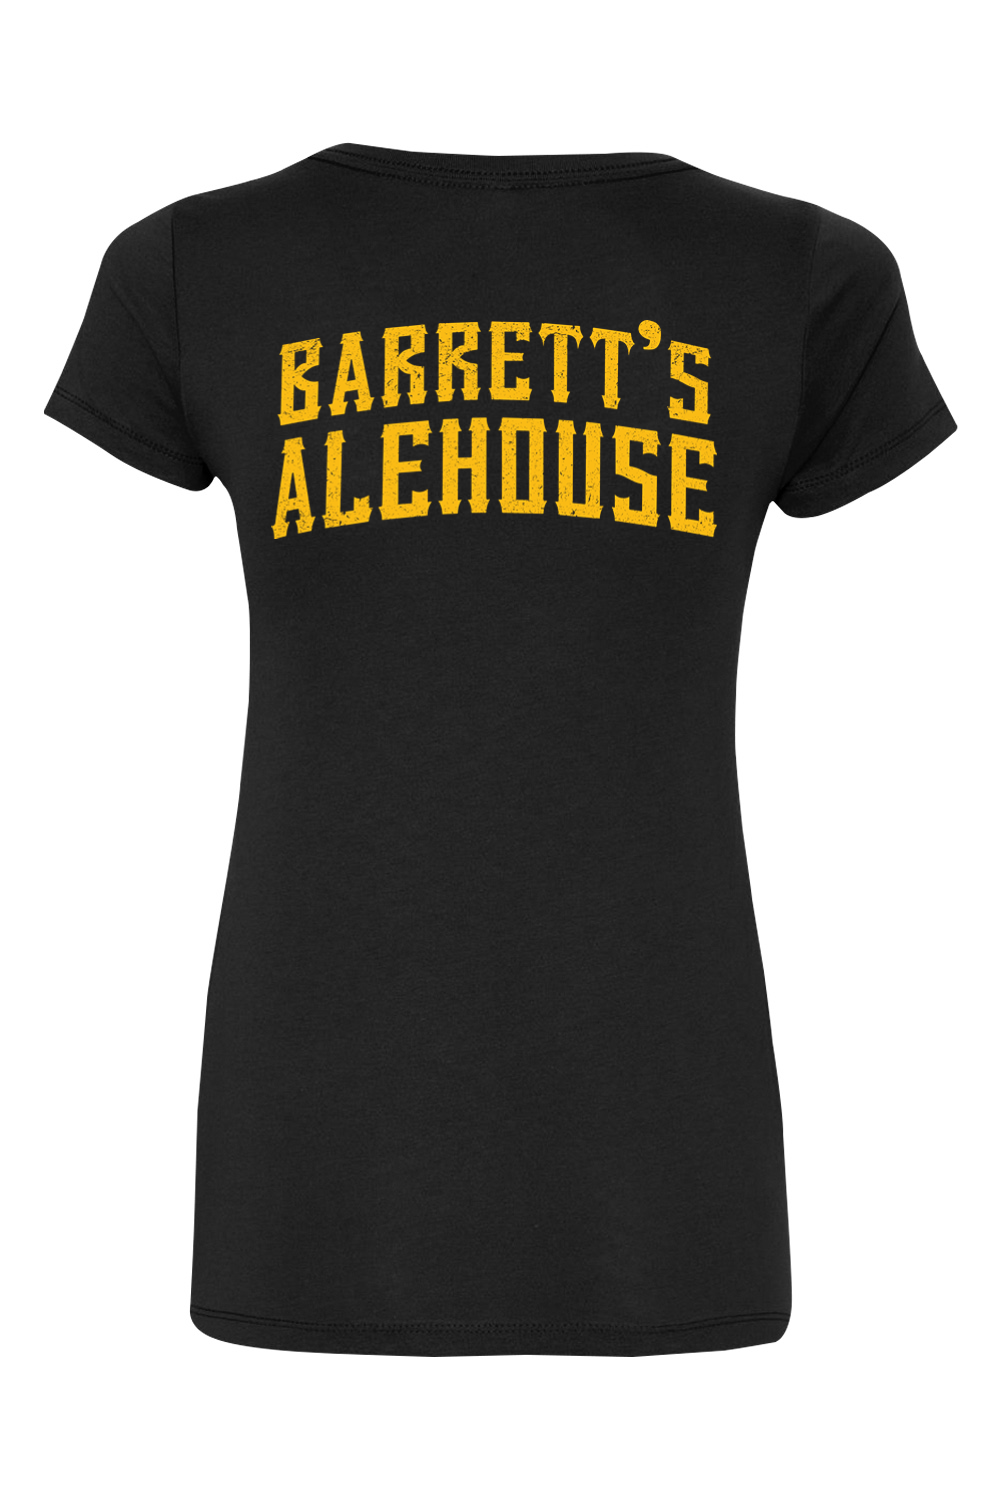 Barrett's Alehouse Black & Gold Women's V-Neck